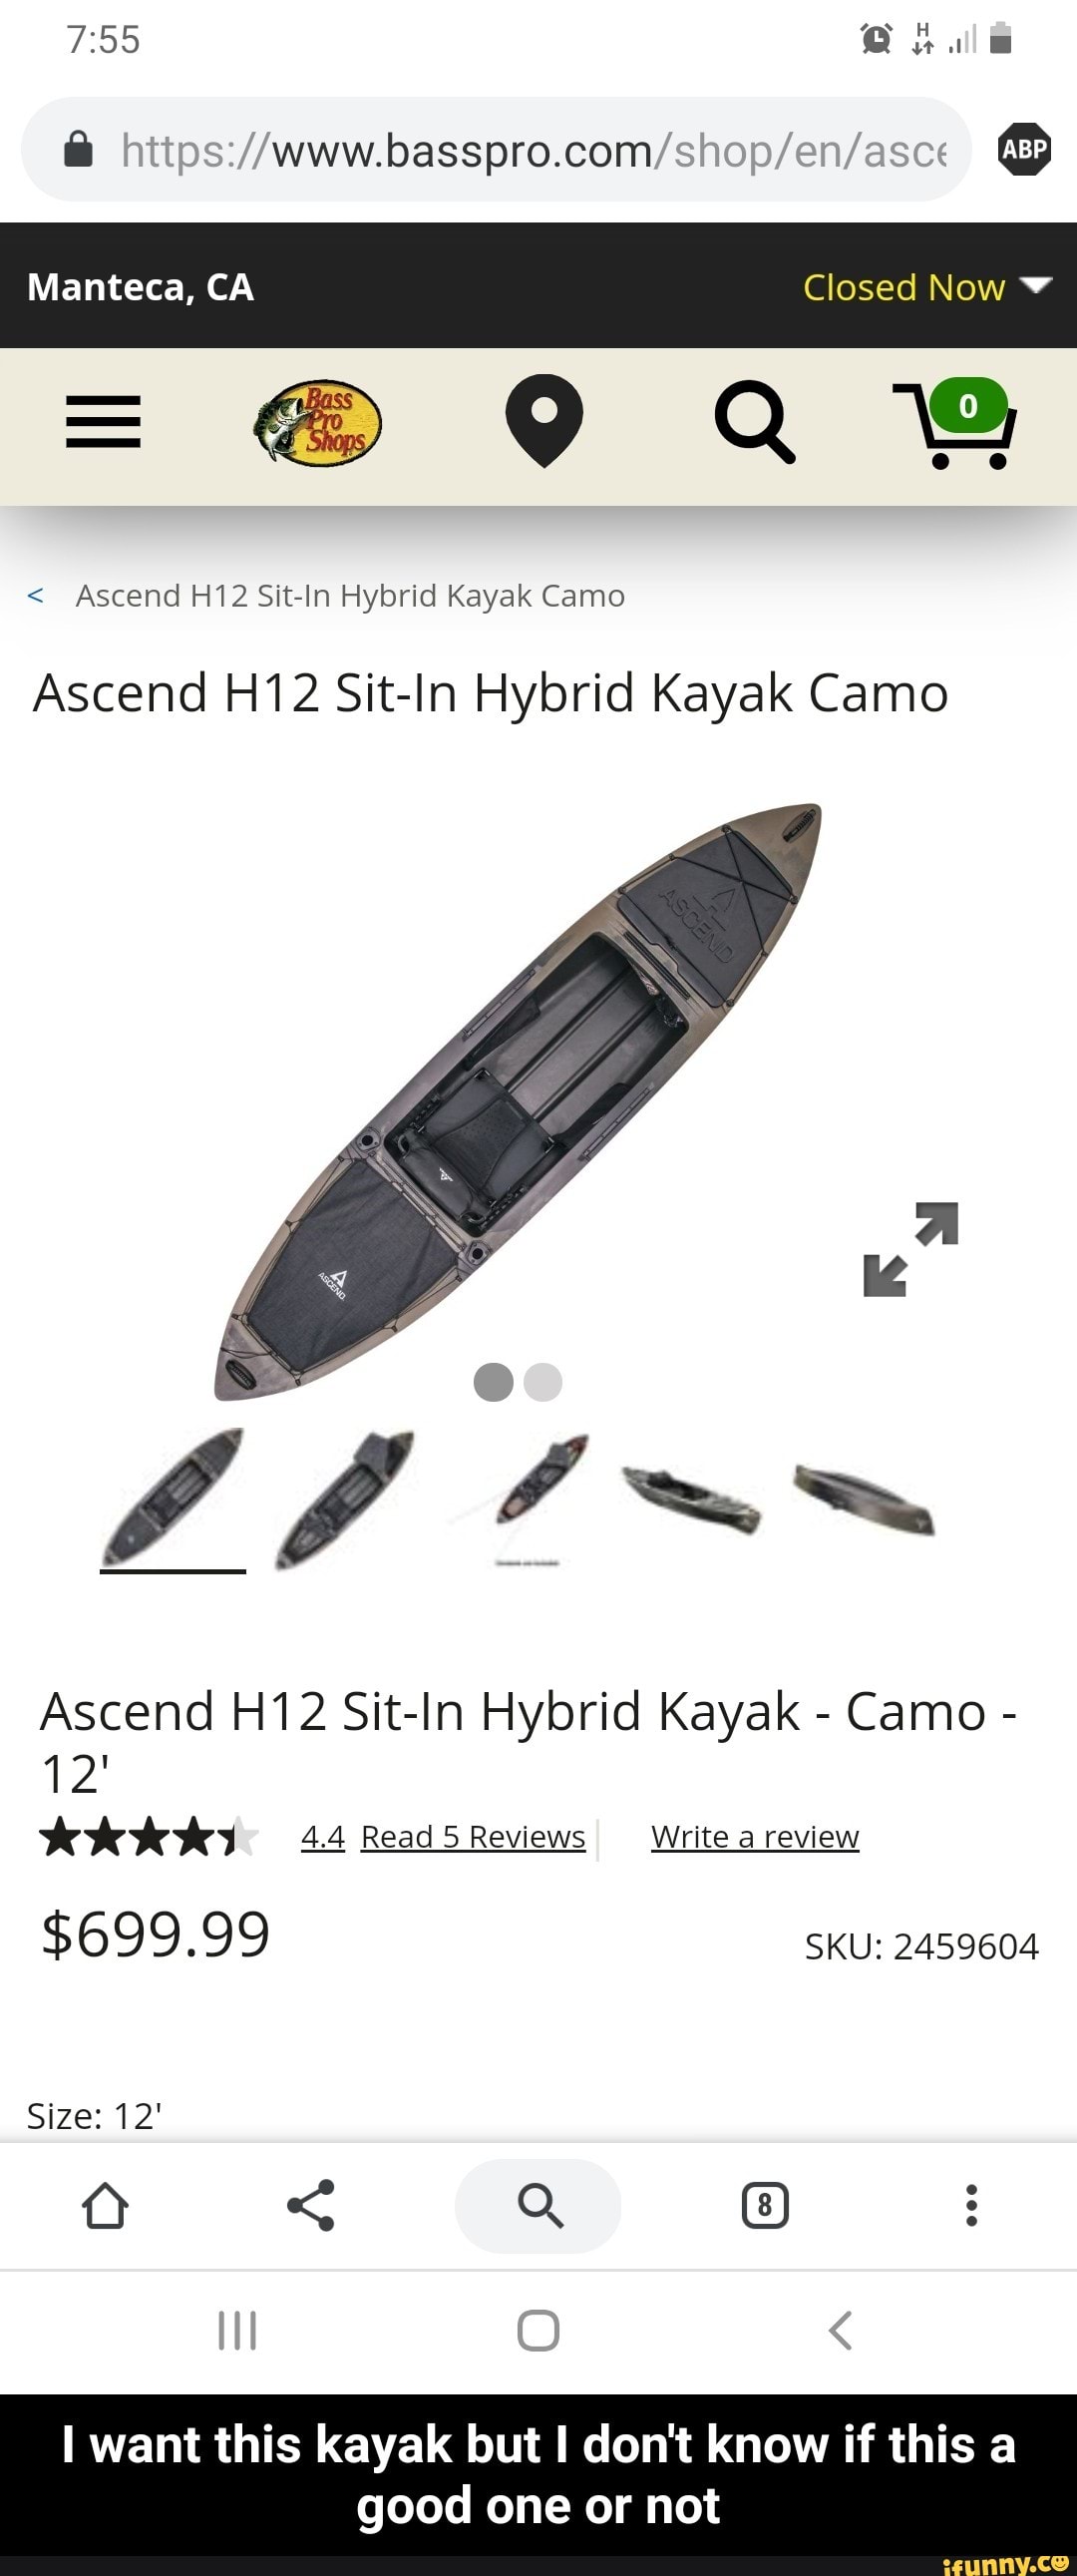 Ascend H12 Sit-In Hybrid Kayak Camo Ascend H12 Sit-ln Hybrid Kayak Camo Ascend  H12